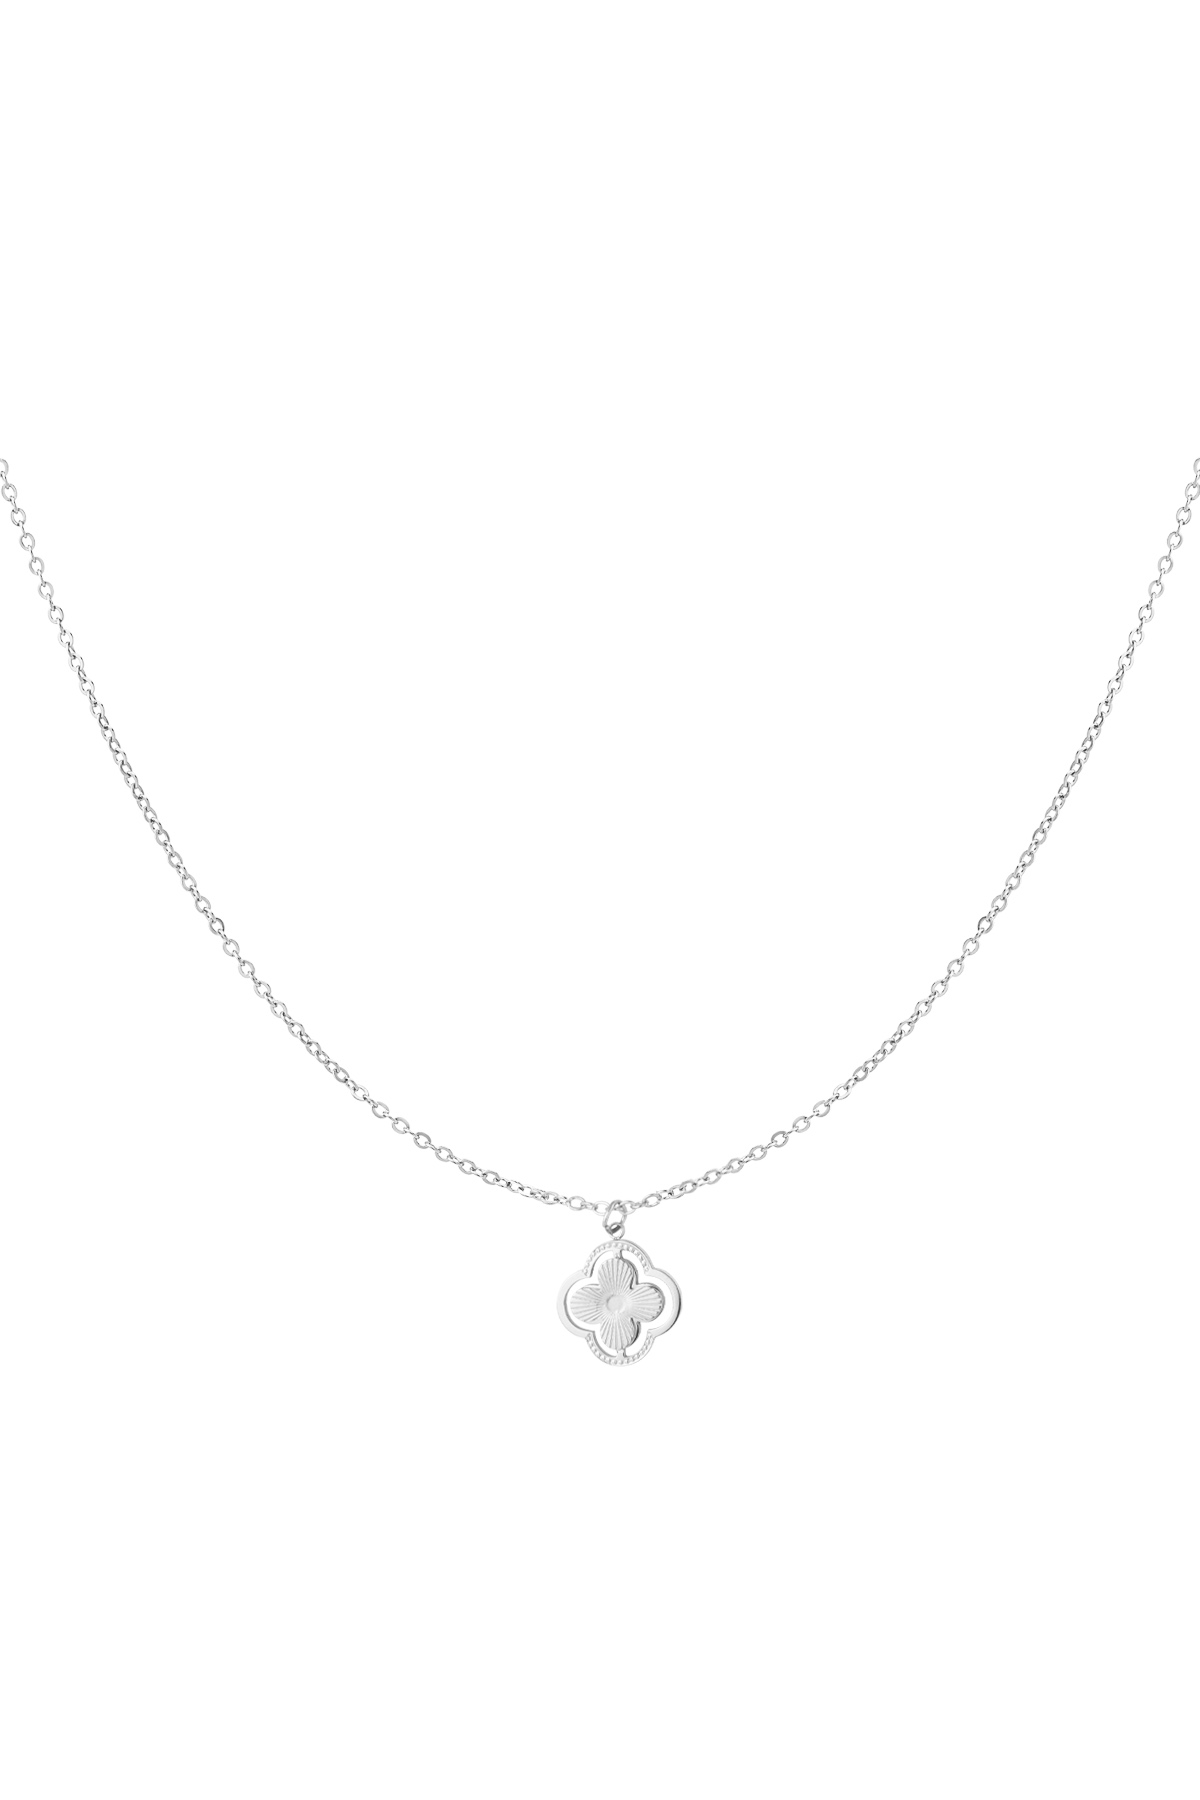 Double clover necklace - silver